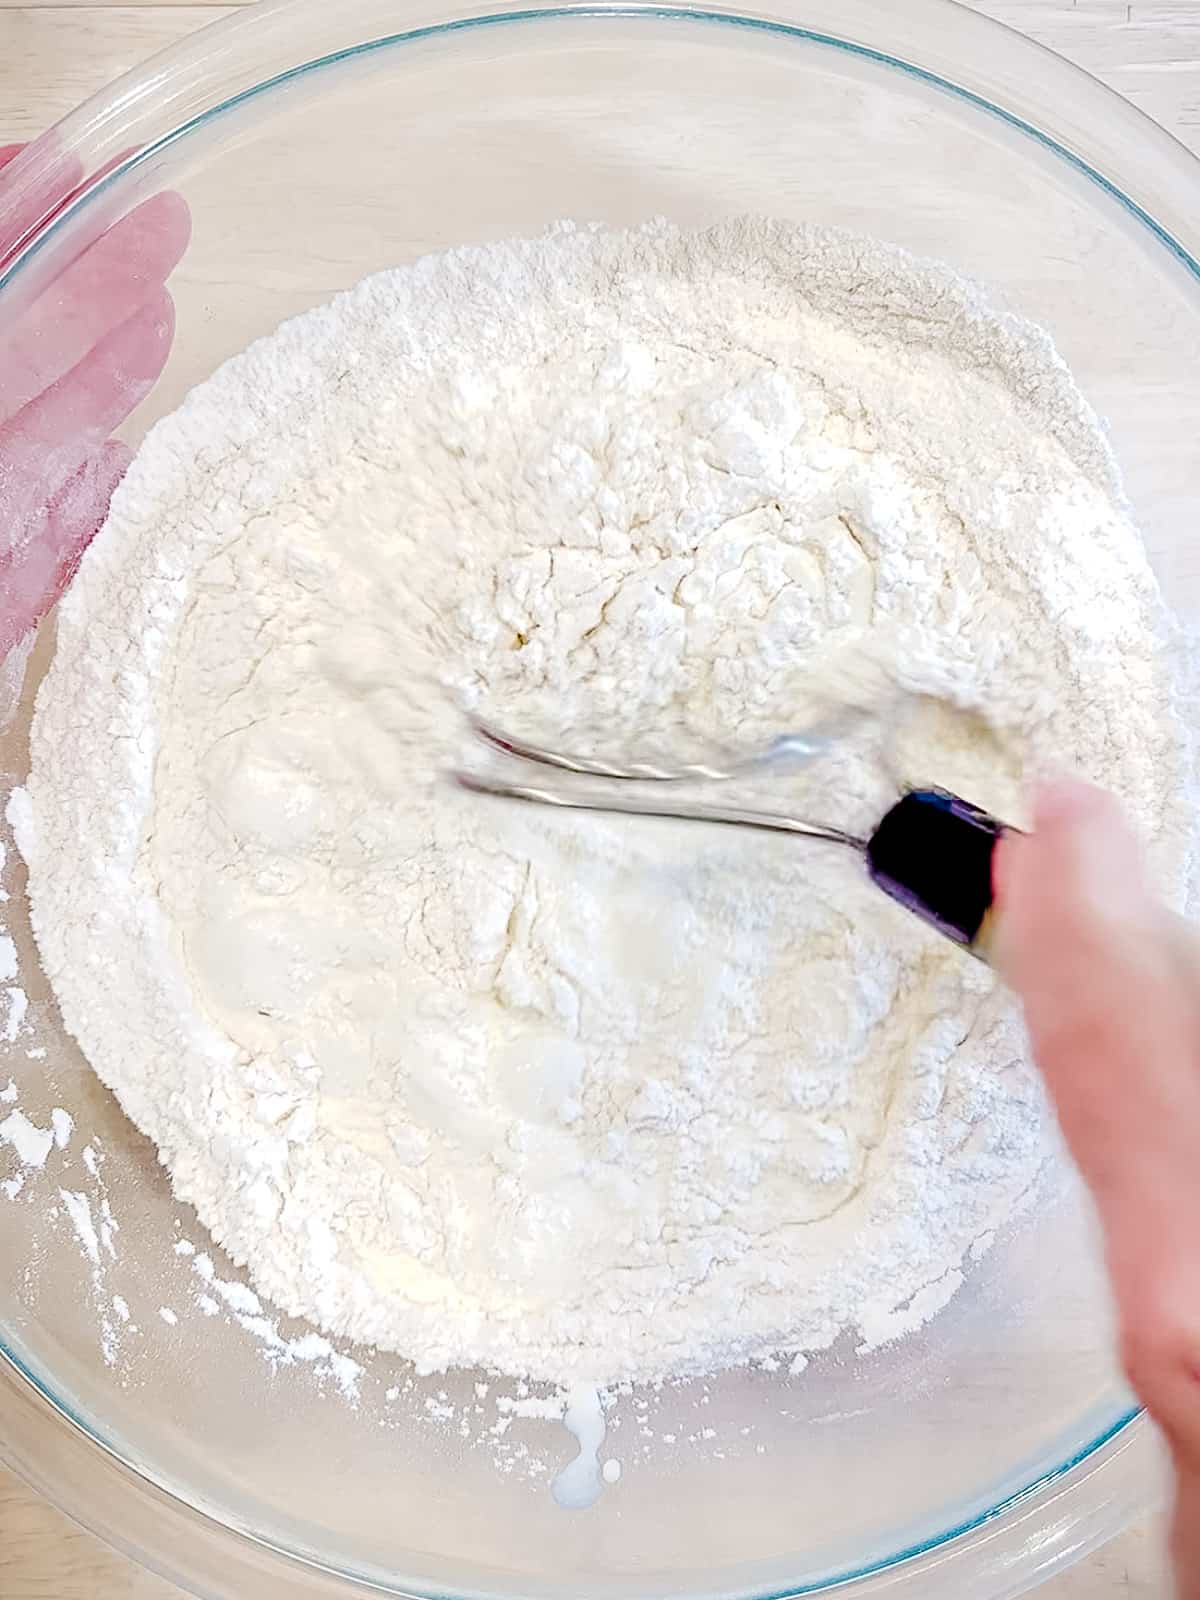 Mixing heavy cream into biscuit ingredients.